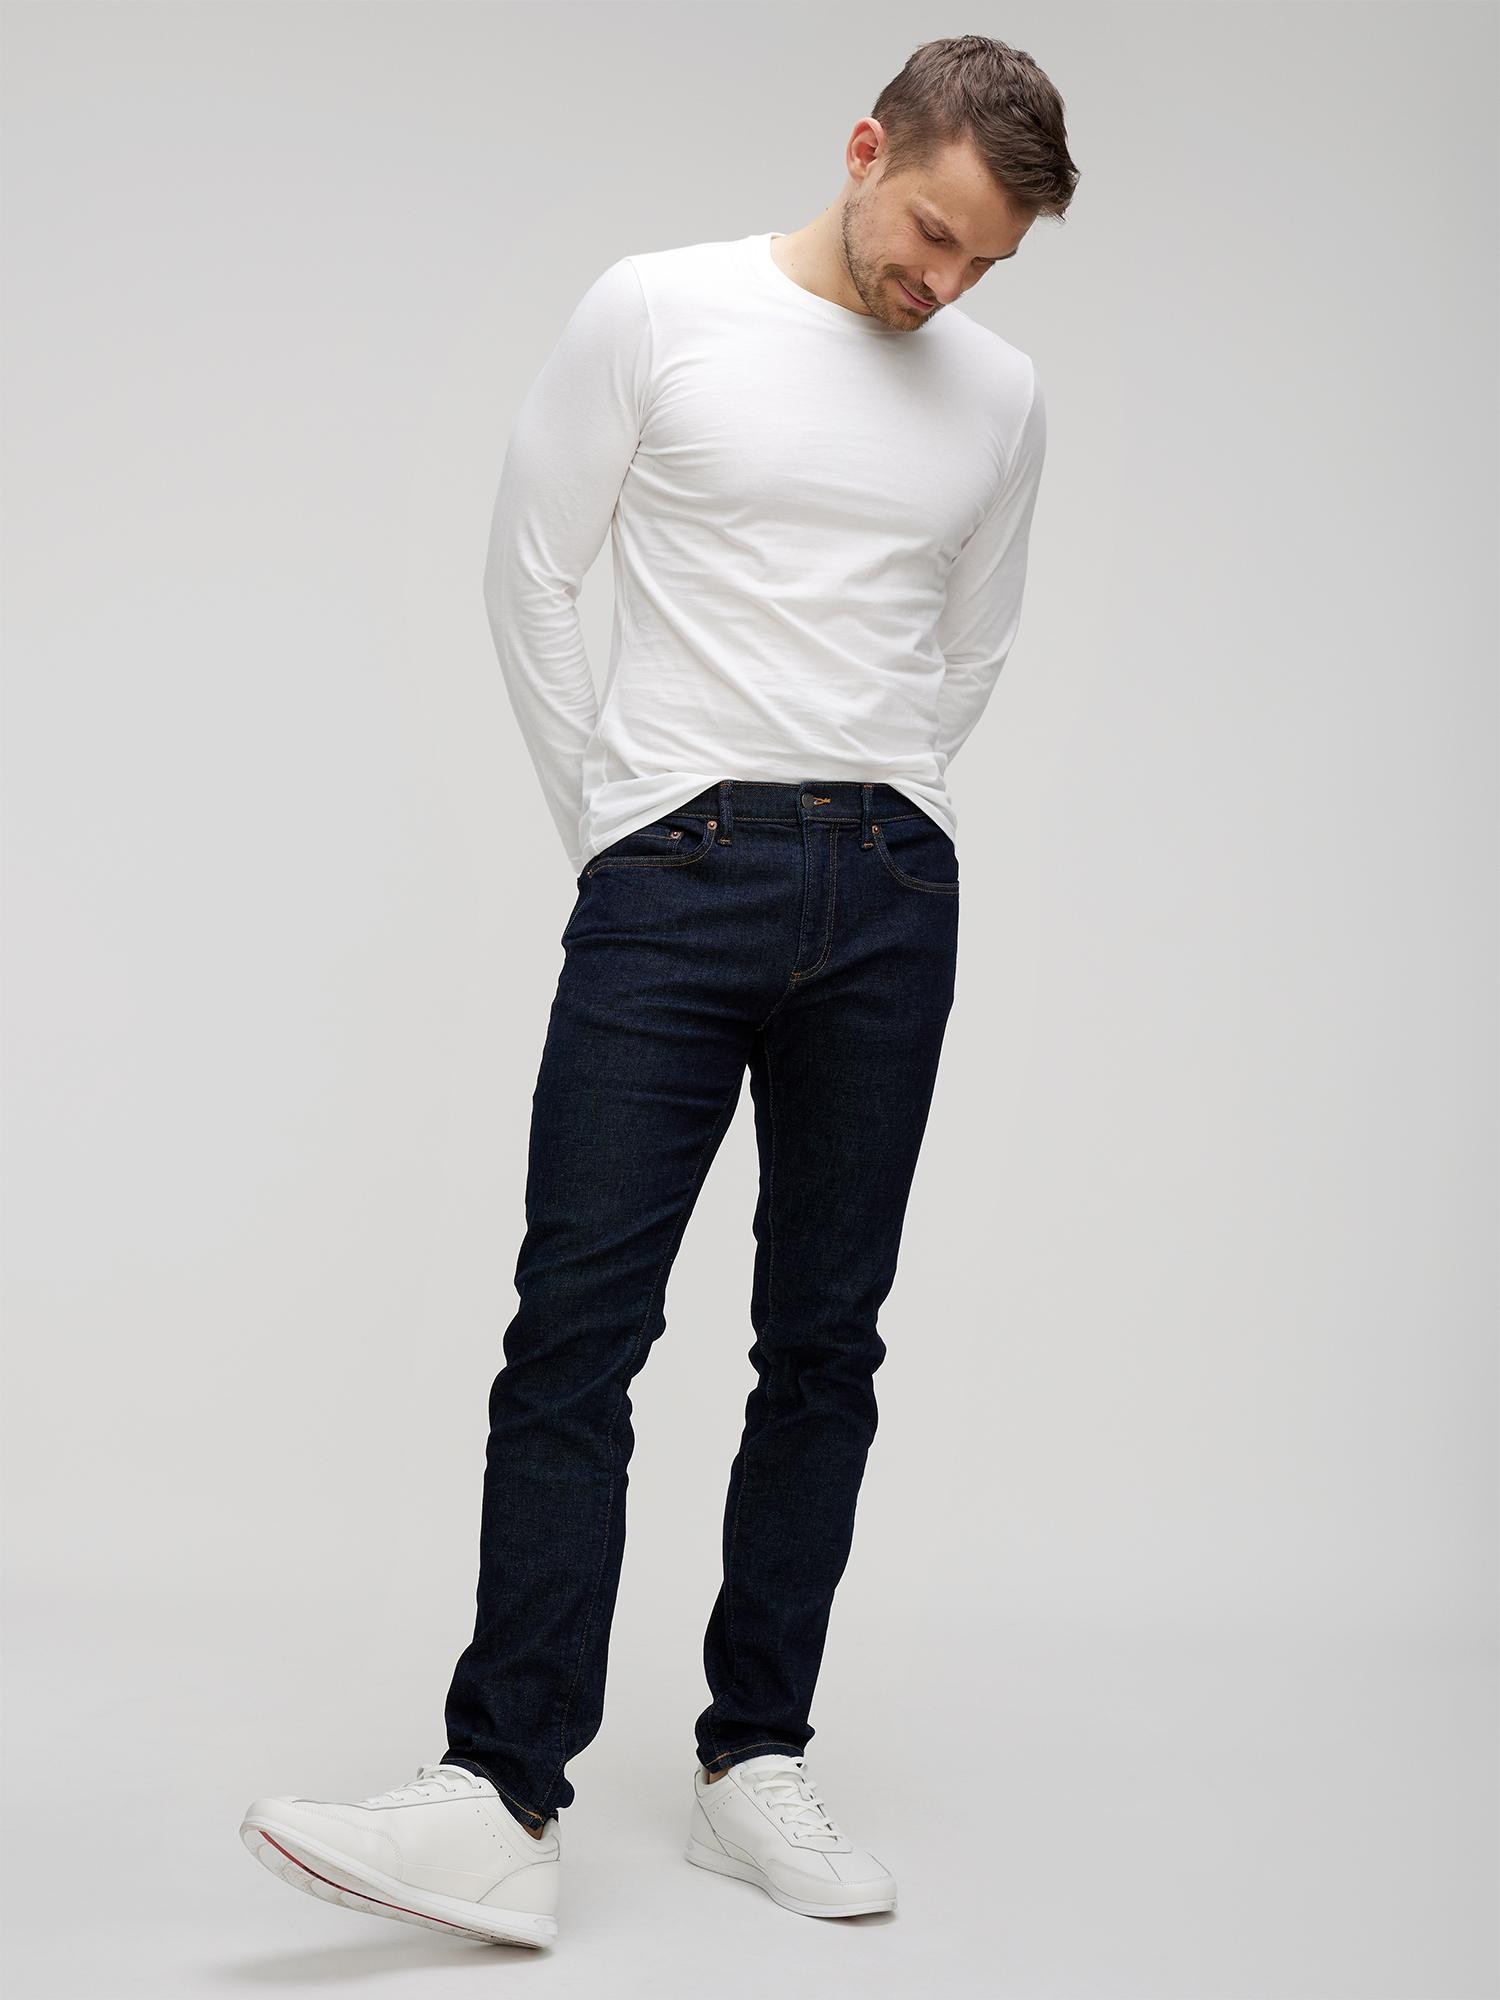 GAP GapFlex Soft Wear Max Skinny Jeans with Washwell